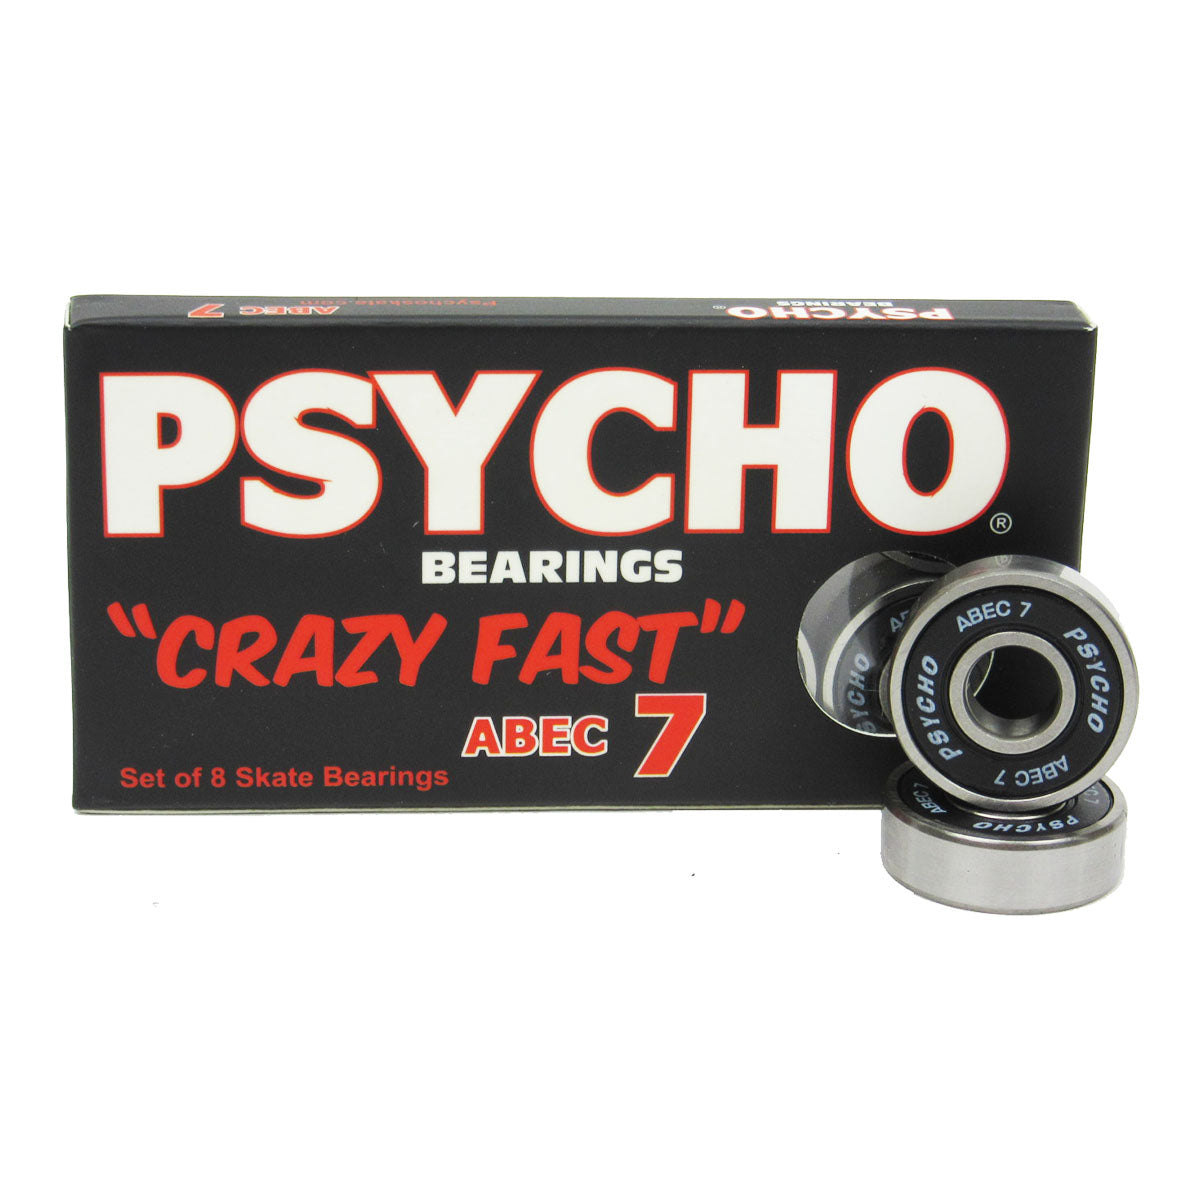 Psycho Swiss Tech Bearings